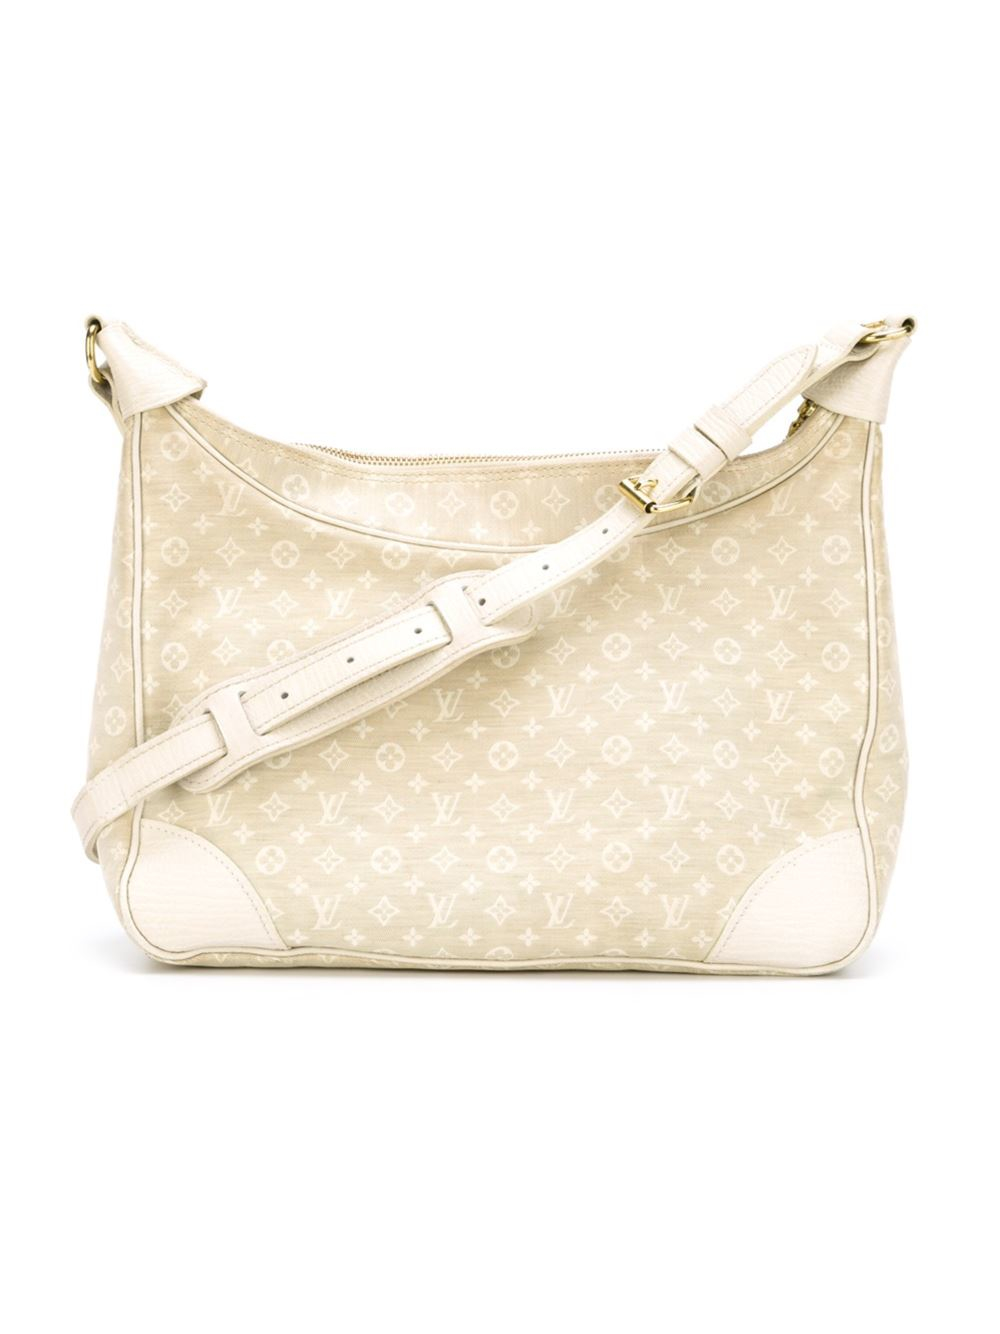 Louis Vuitton Linen Monogram Shoulder Bag in White - Lyst